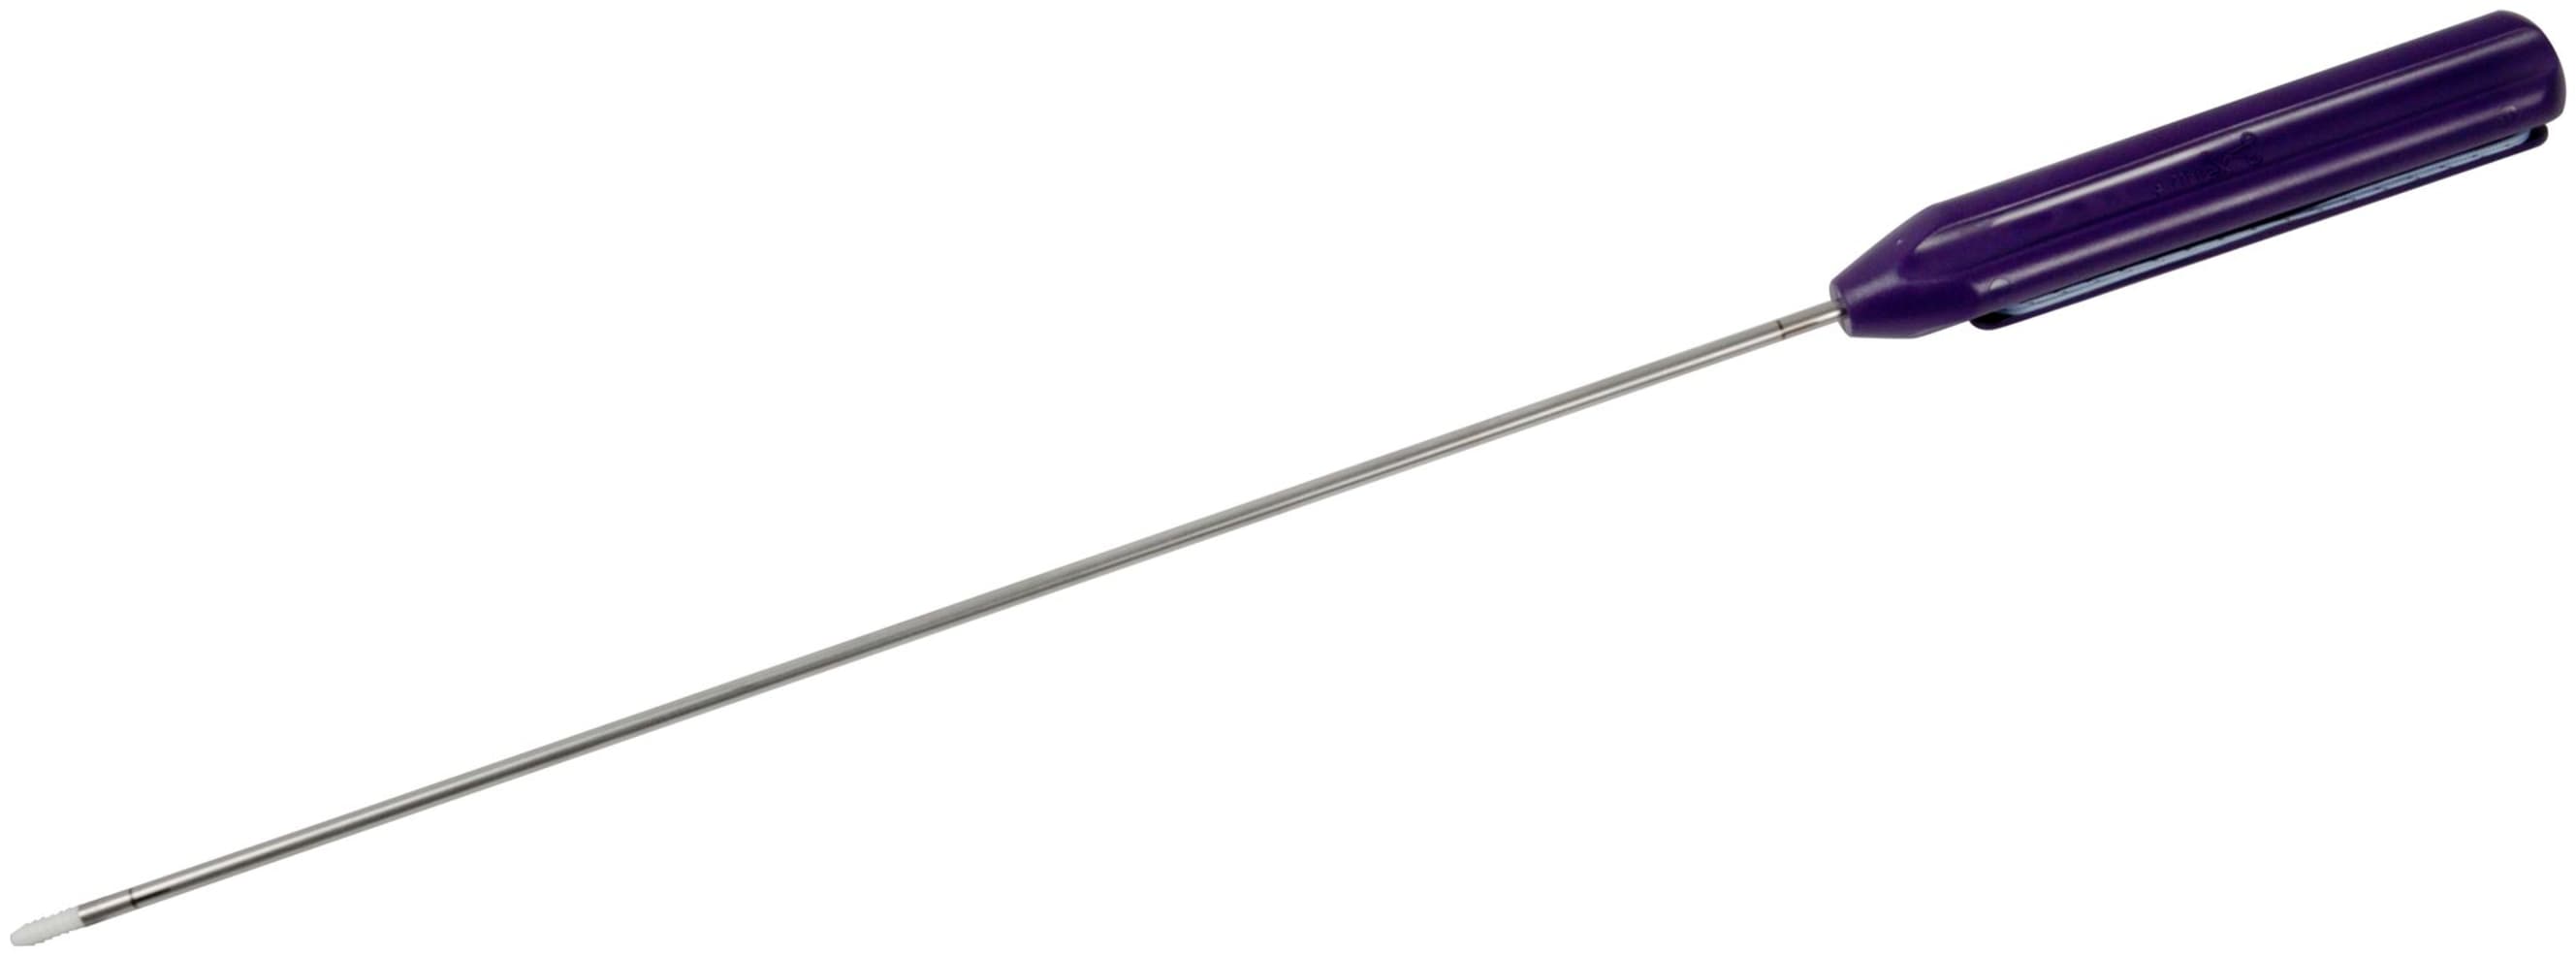 BioComposite SutureTak Suture Anchor, 3 mm x 14.5 mm w/#2 TigerTail